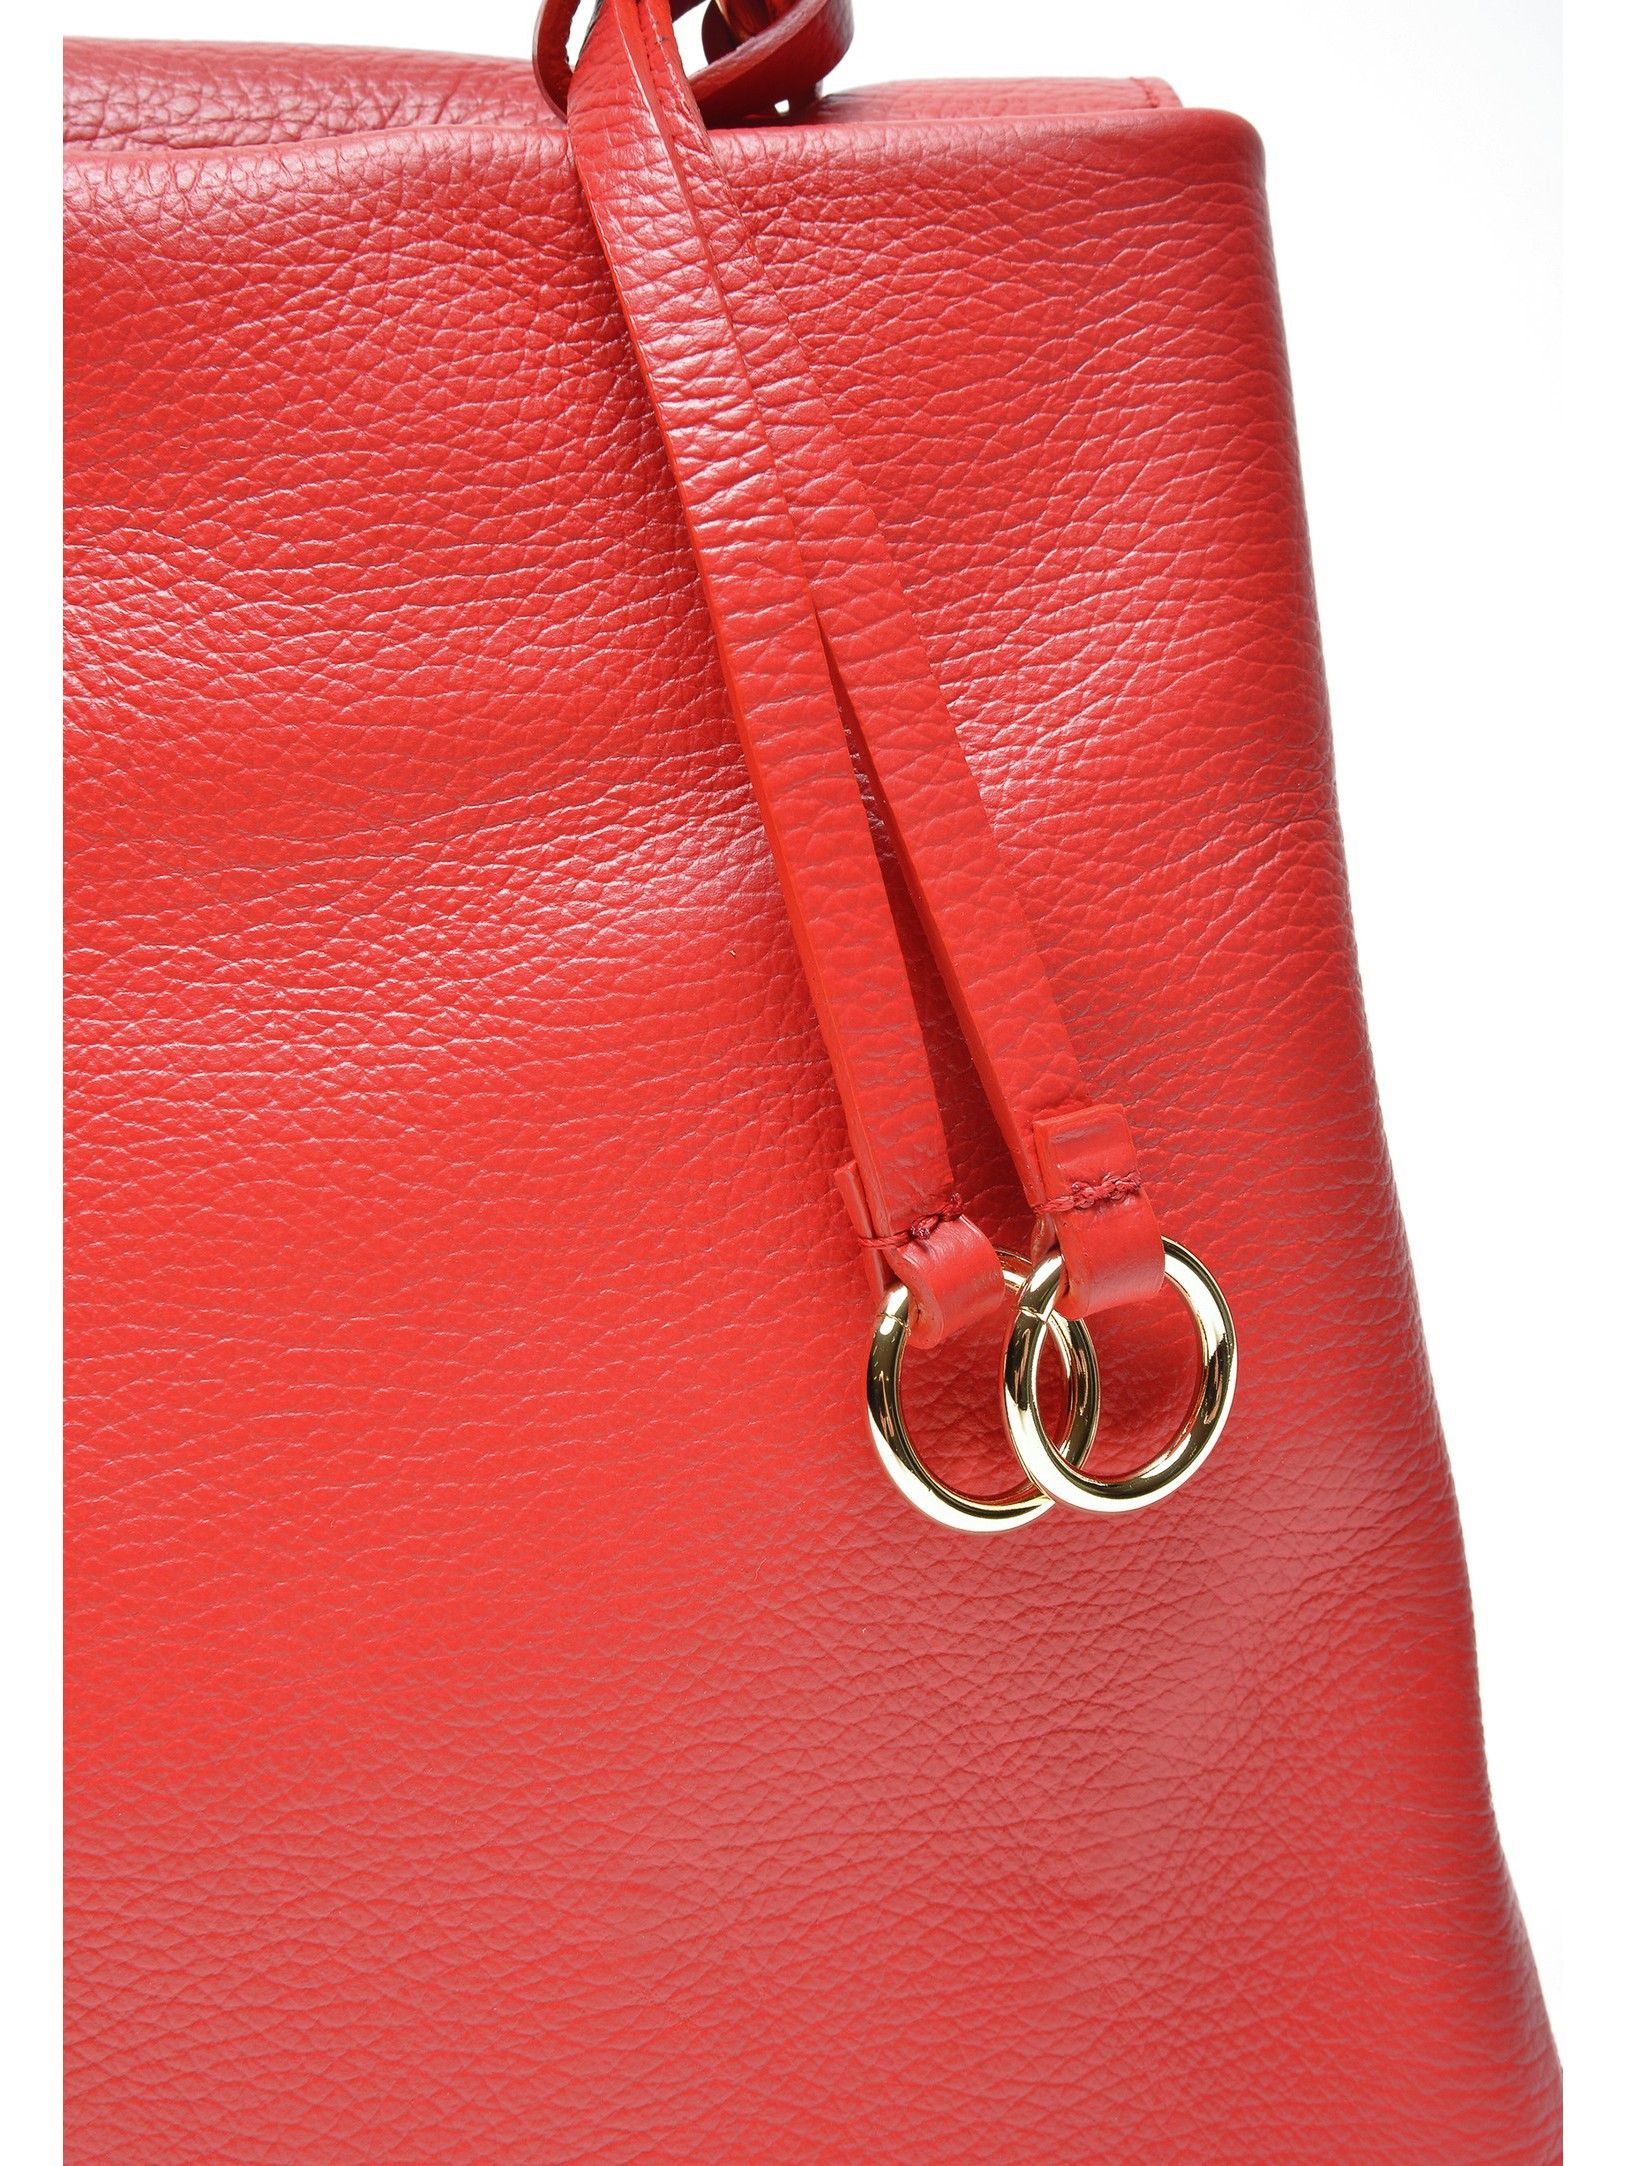 Handbag
100% cow leather
Flap over clasp closure
Inner zip pocket
Back zip pocket
Dimensions (L): 25x35x11.5 cm
Handle: 33 cm
Shoulder strap: 120 cm adjustable